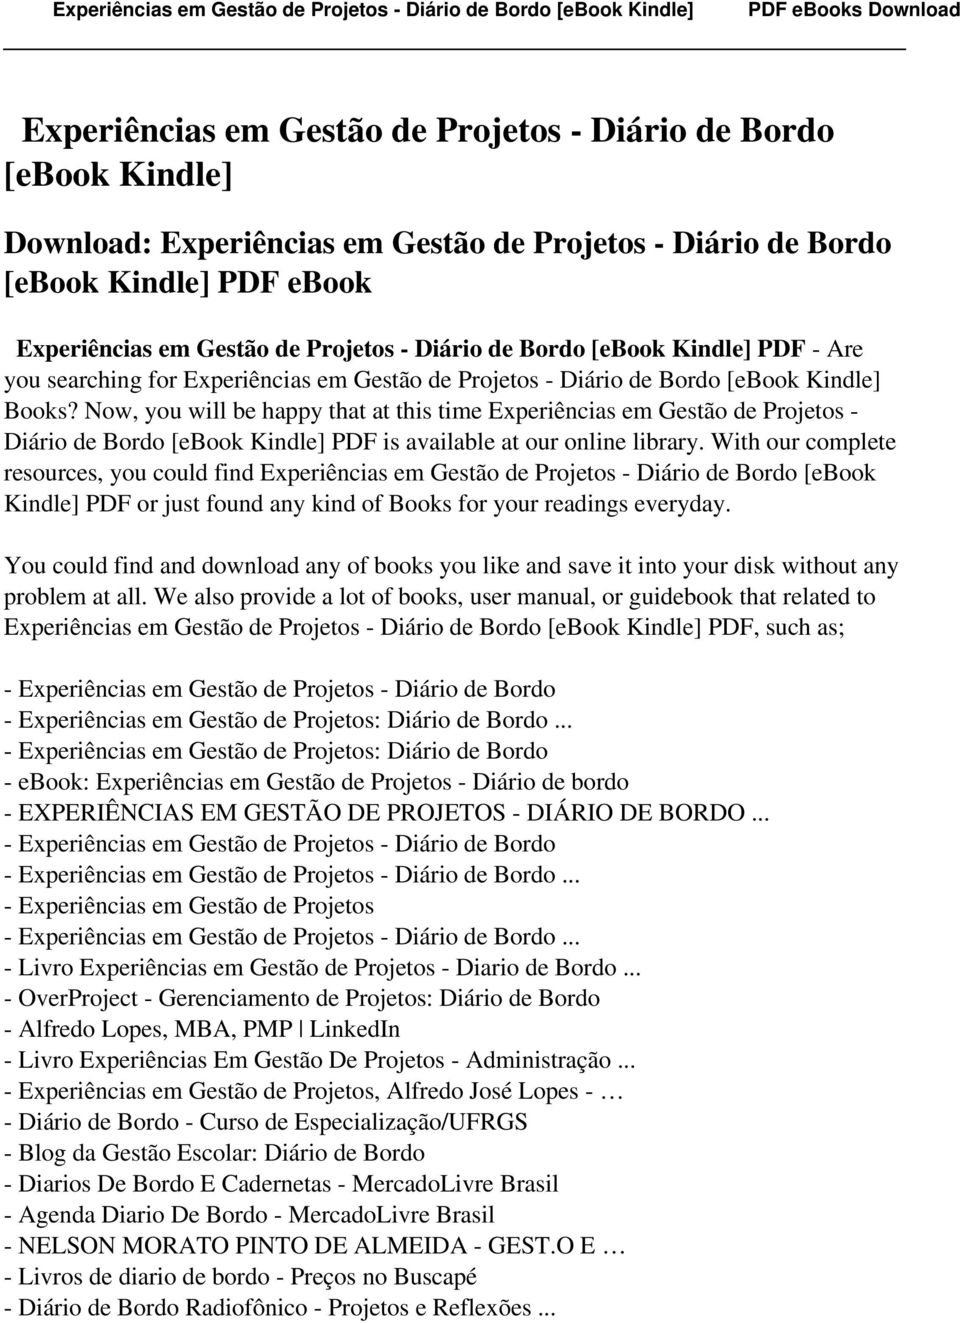 Now, you will be happy that at this time Experiências em Gestão de Projetos - Diário de Bordo [ebook Kindle] PDF is available at our online library.